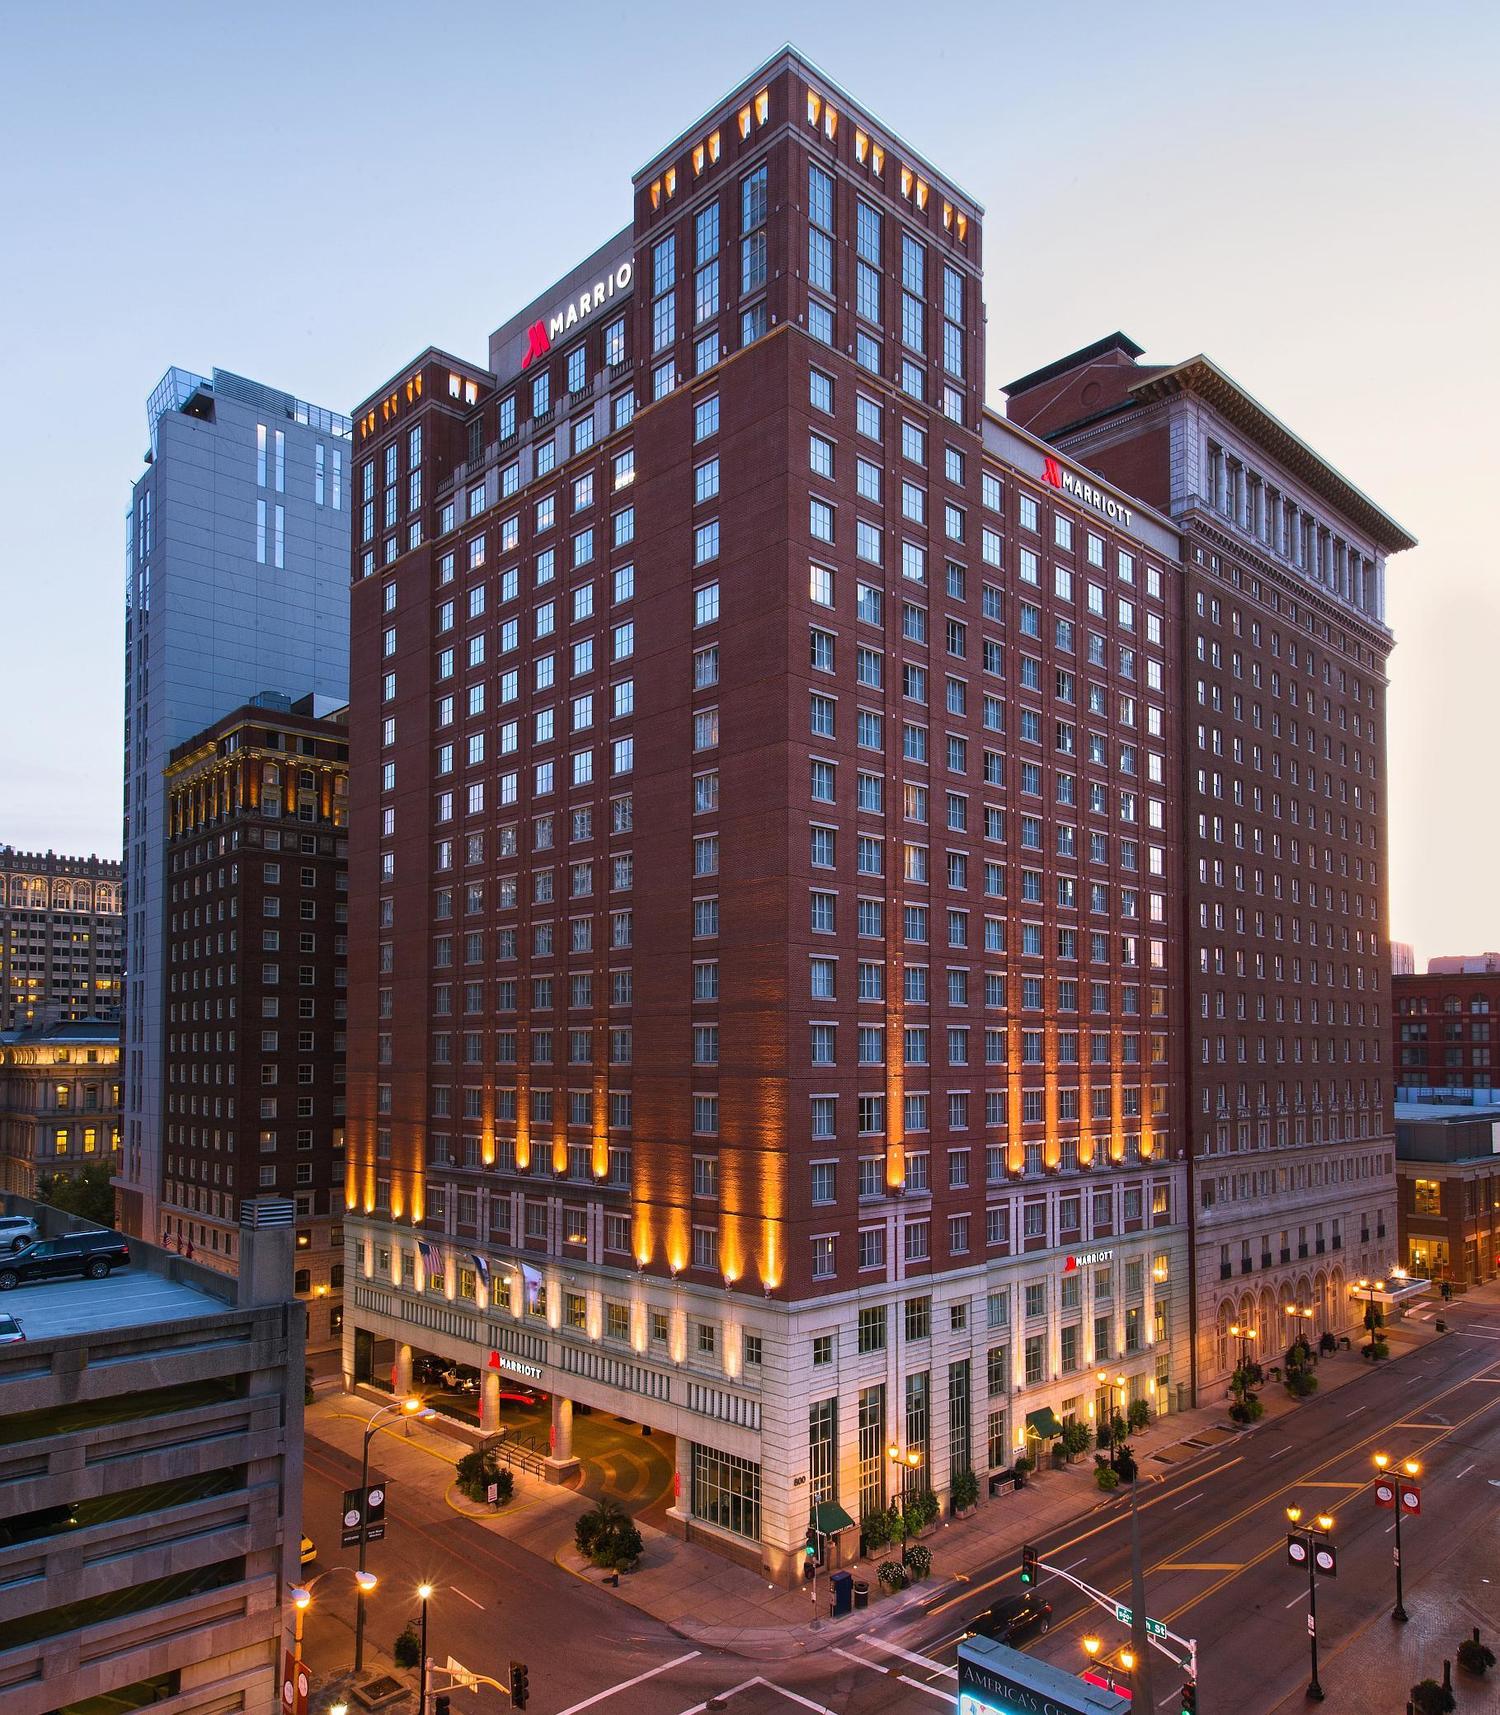 Marriott St. Louis Grand, St. Louis, MO Jobs | Hospitality Online